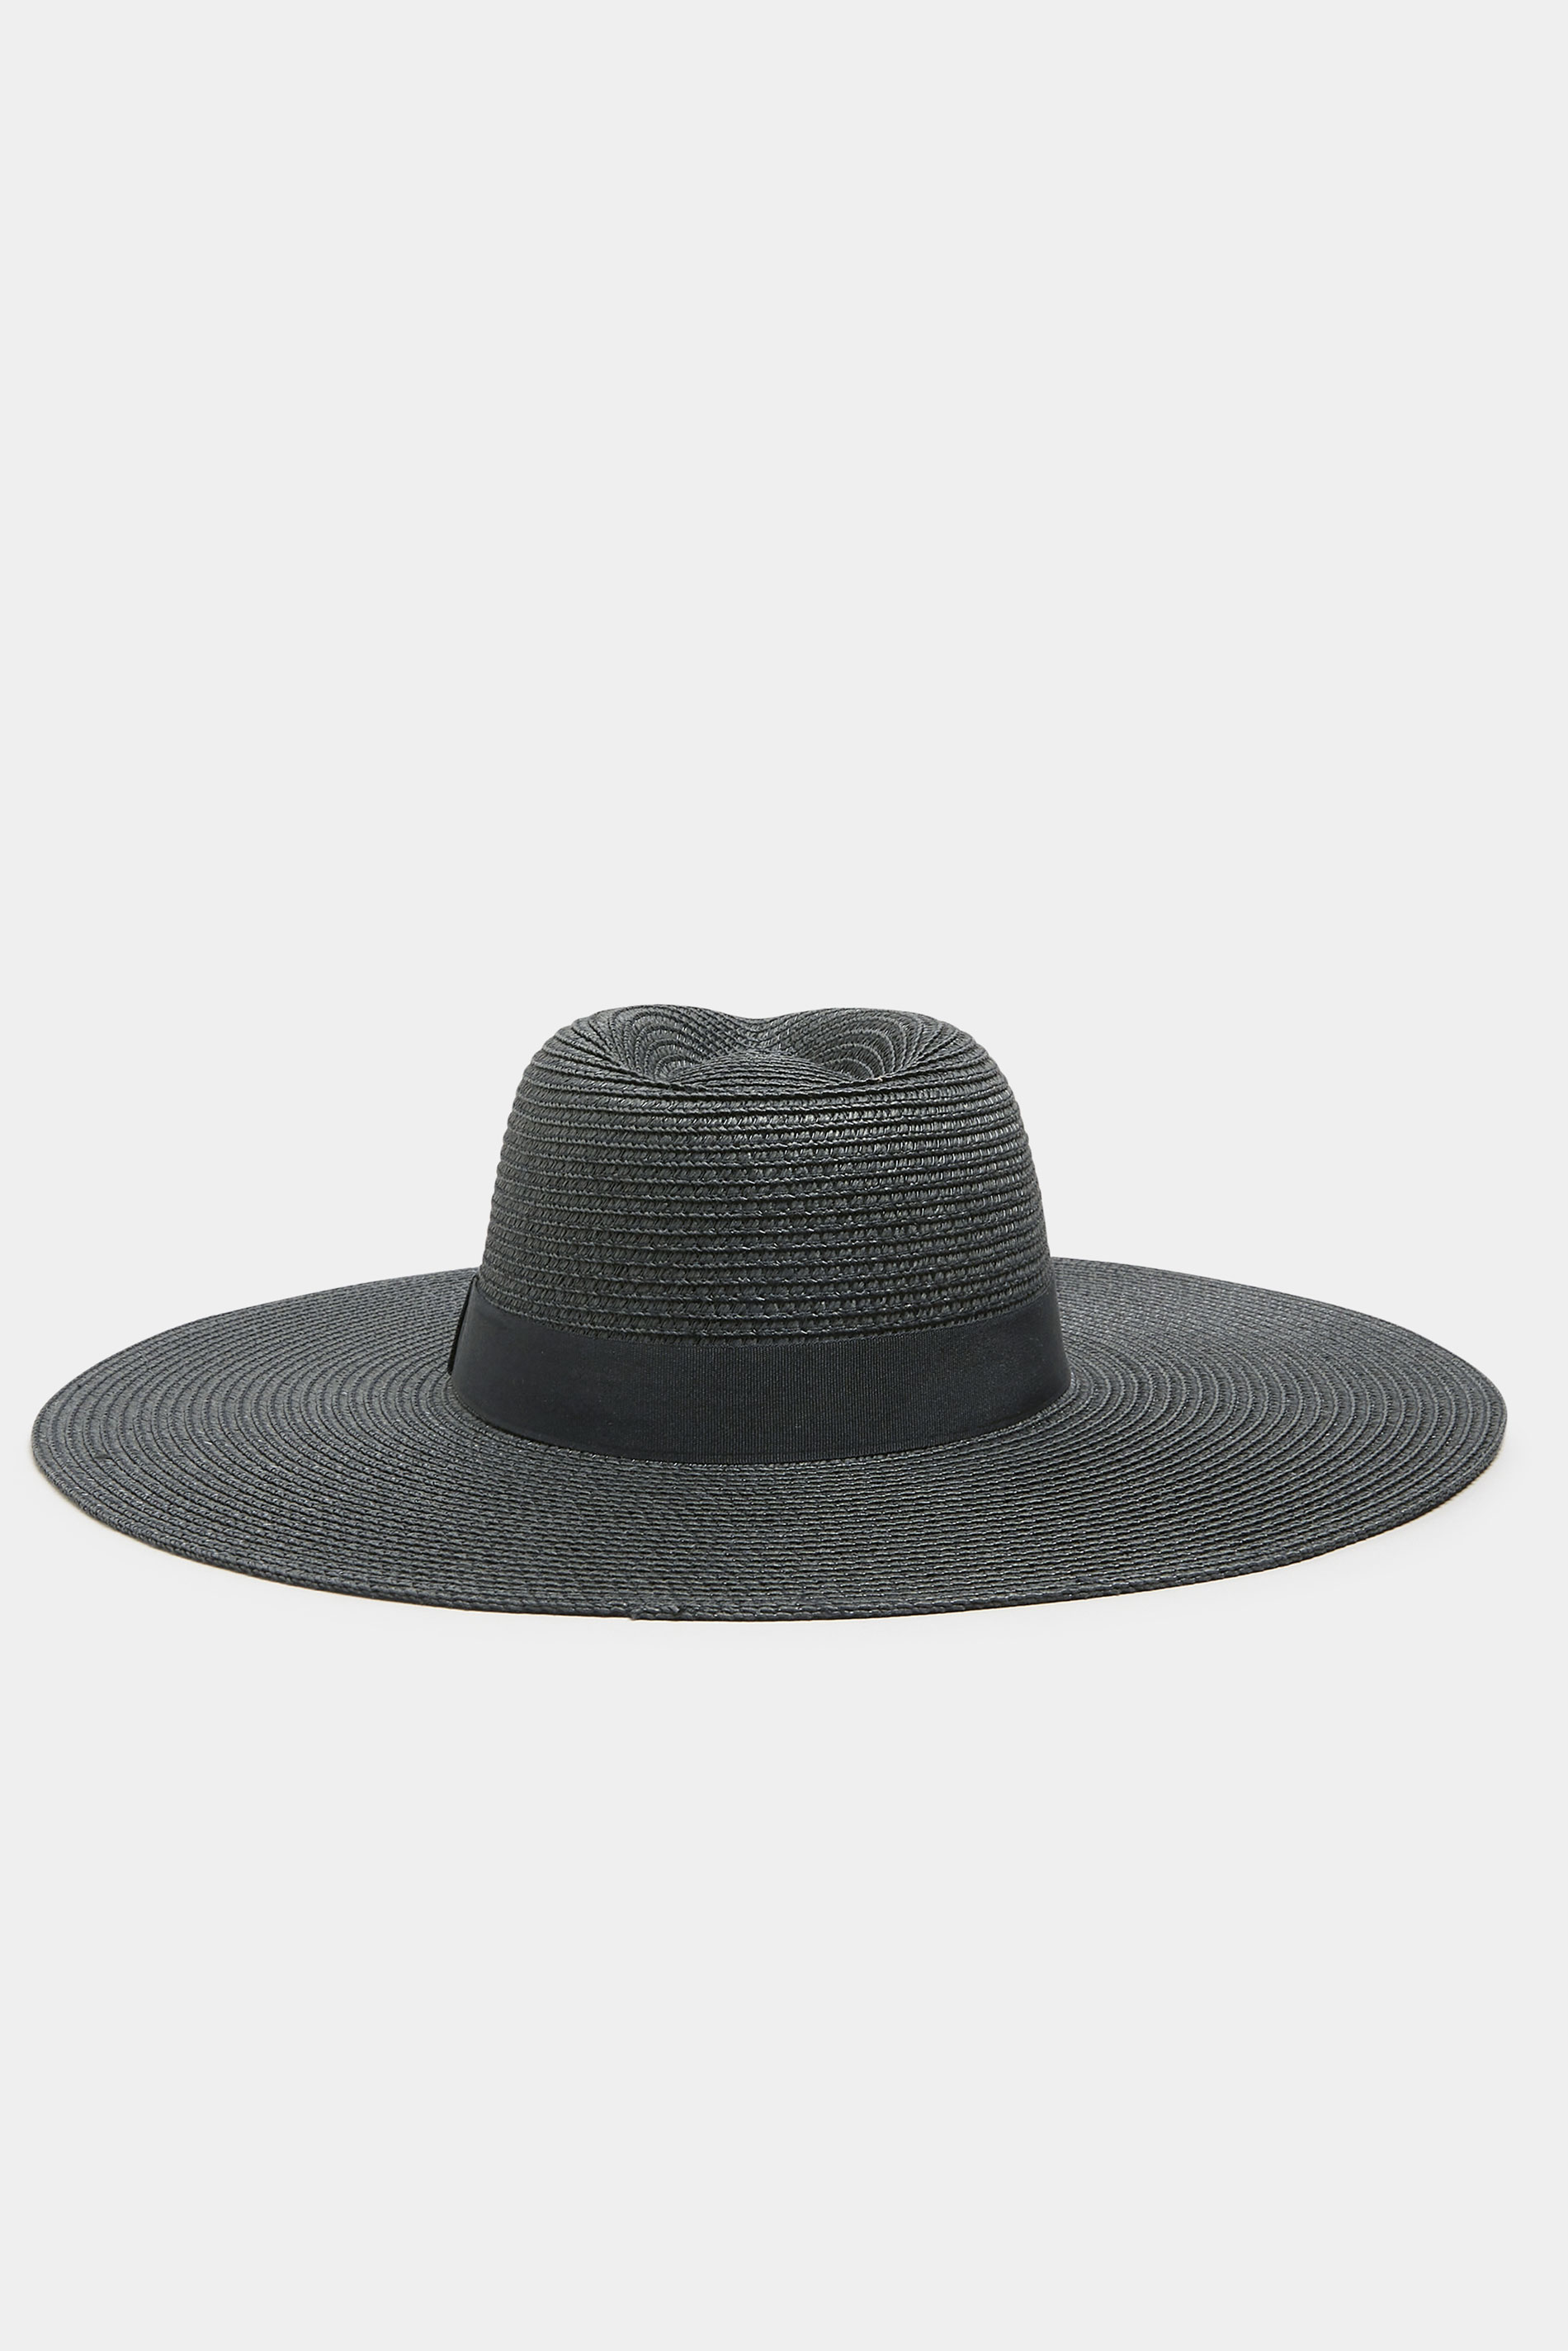 Black Wide Brim Straw Fedora Hat | Yours Clothing  1